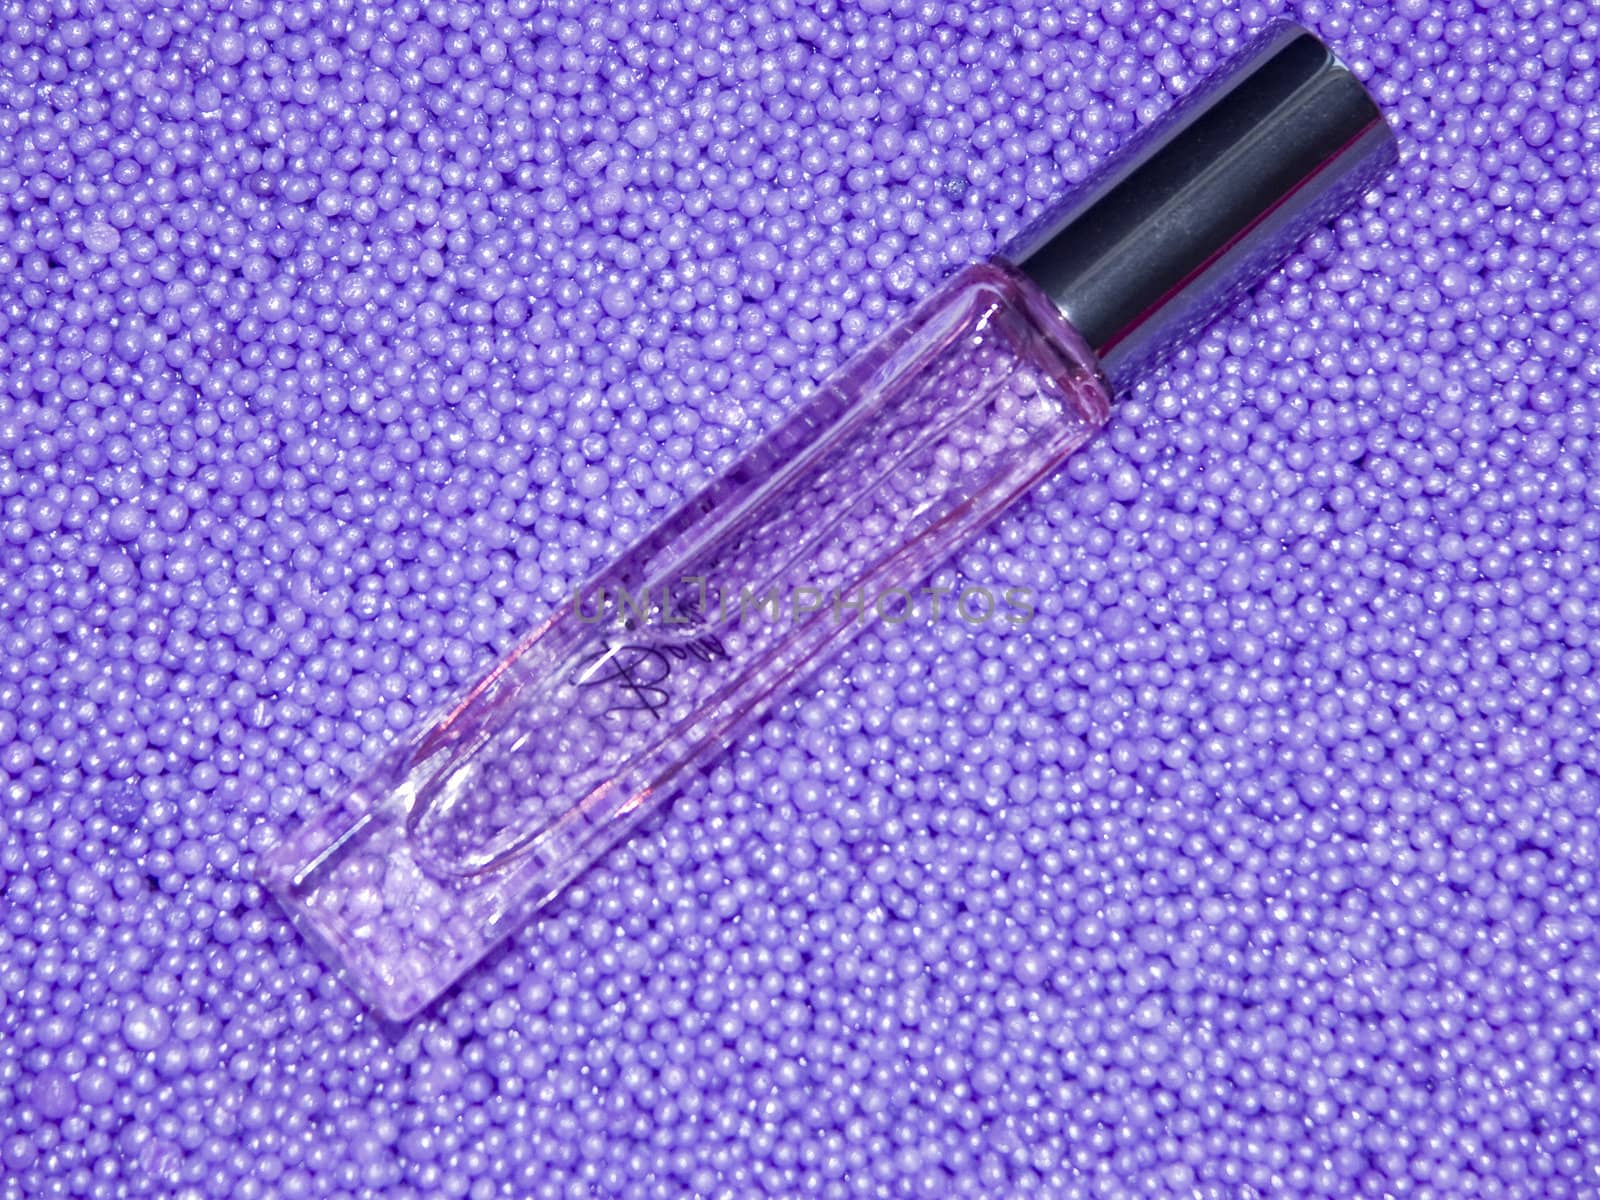 Lilac aroma by soloir